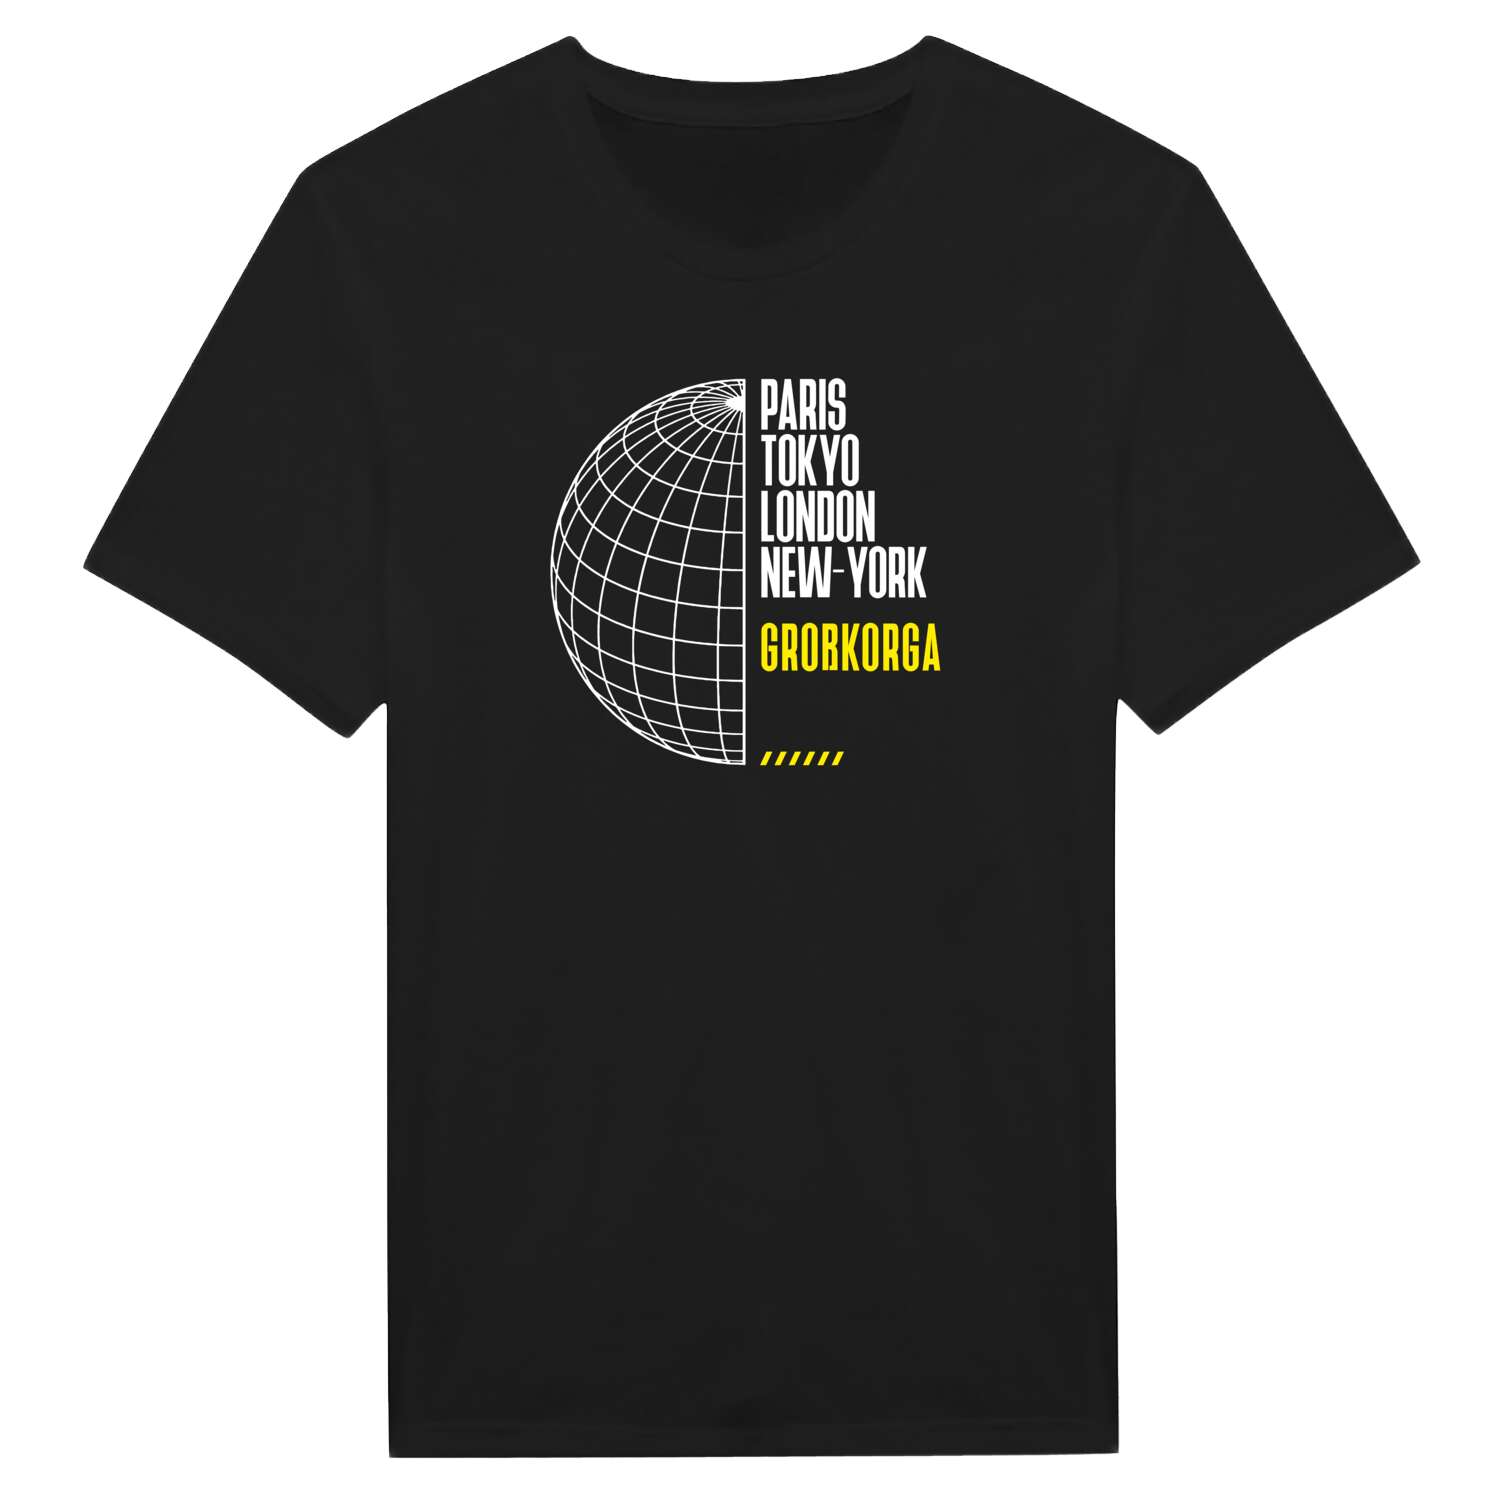 Großkorga T-Shirt »Paris Tokyo London«